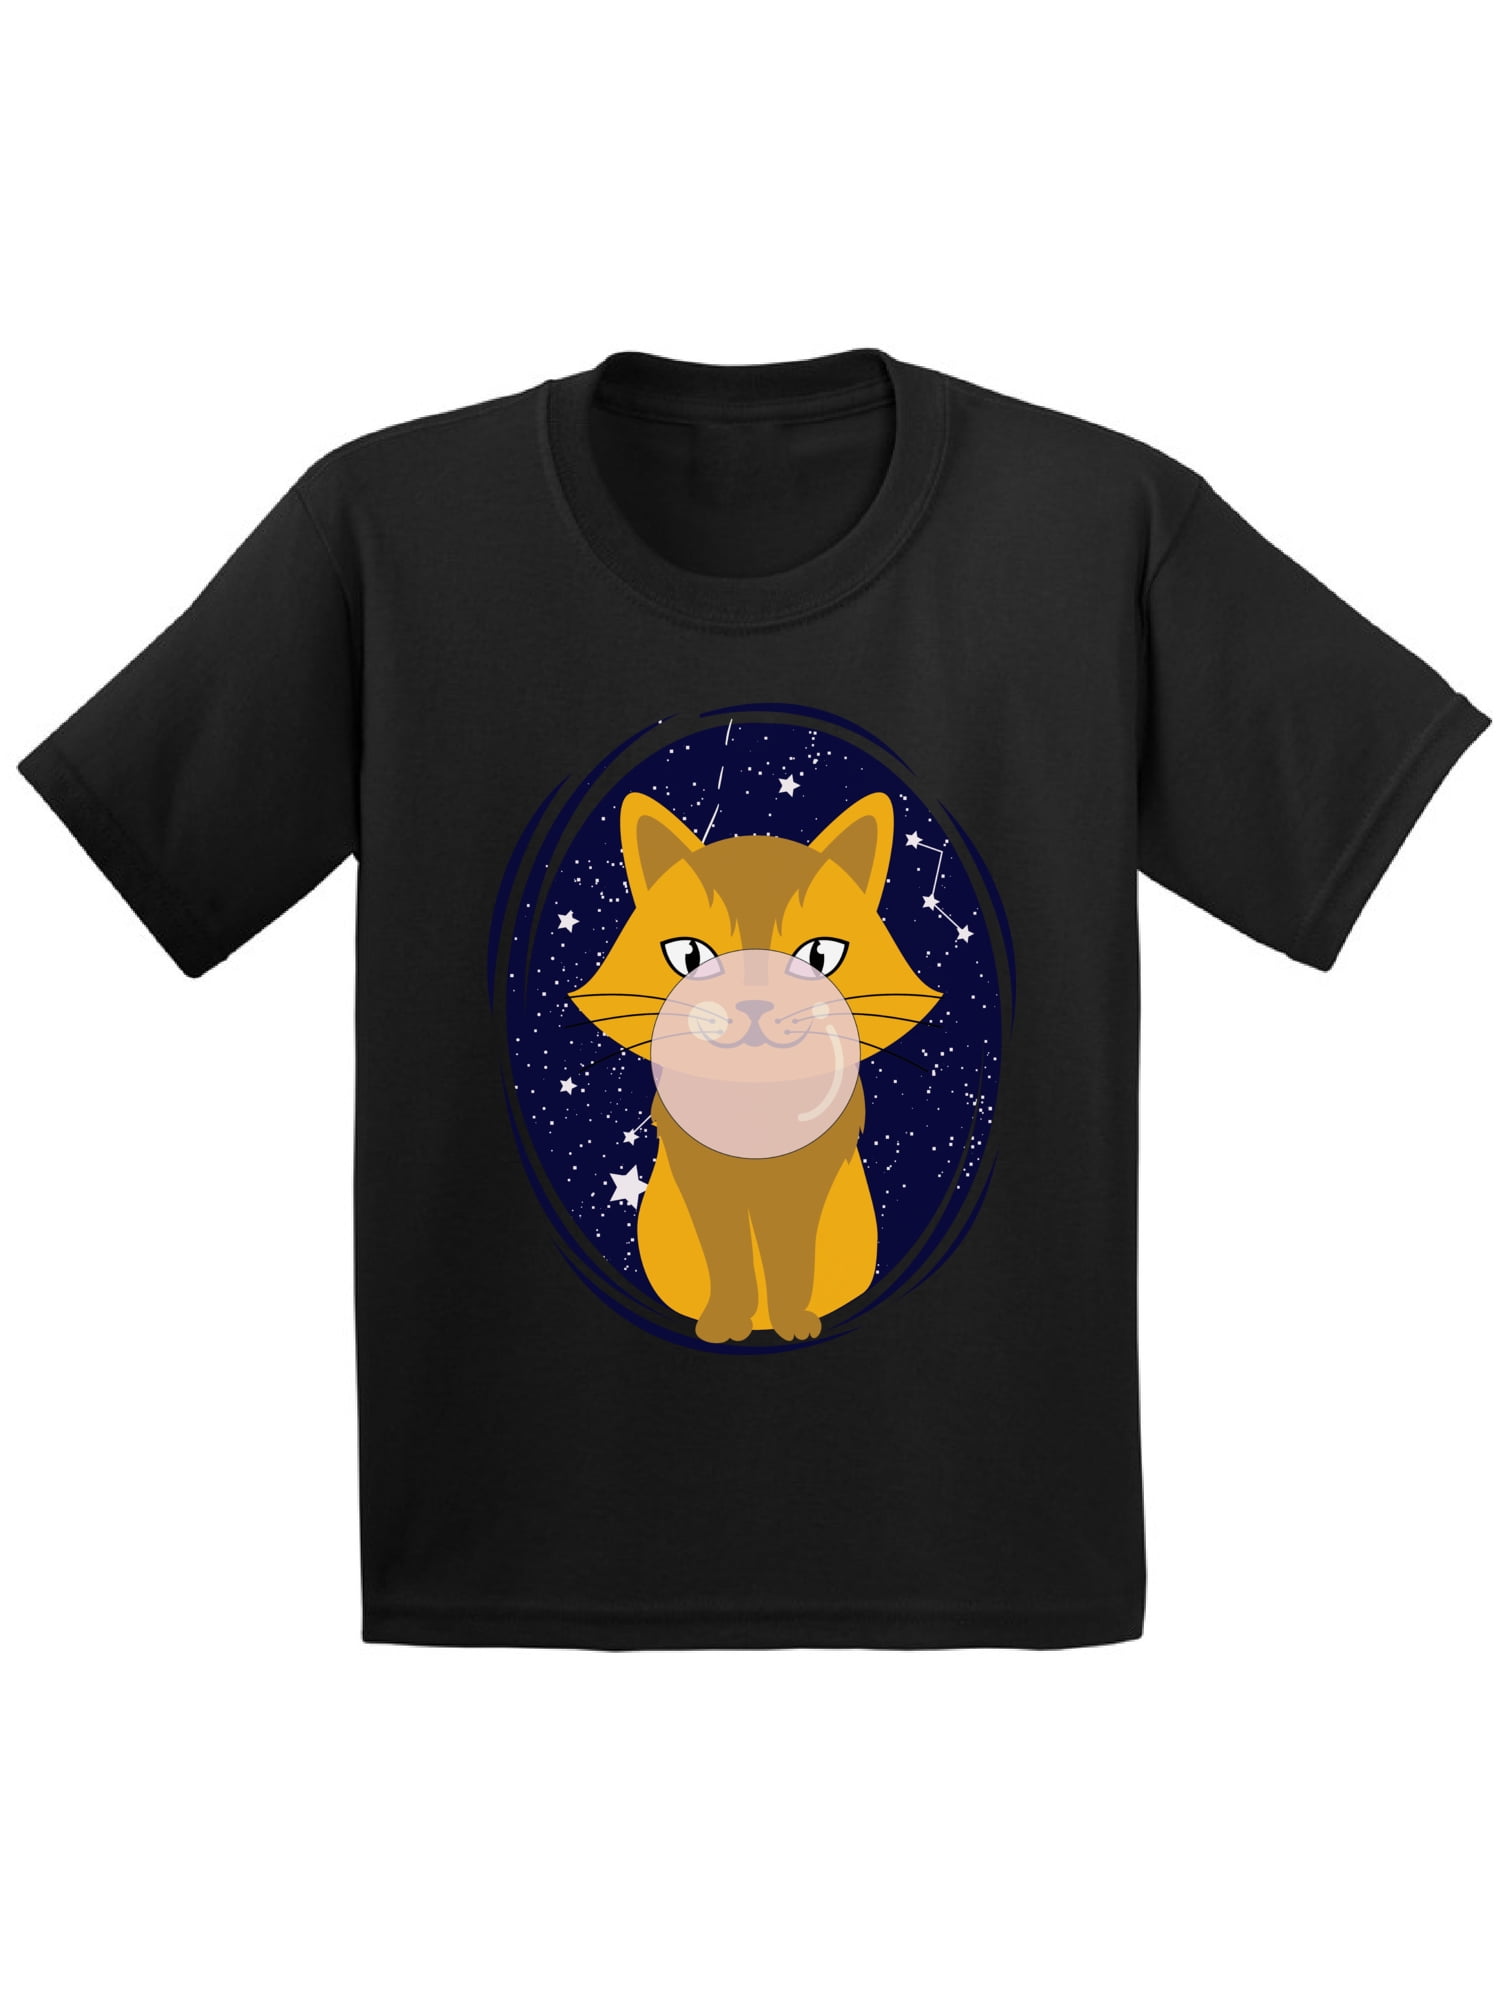 Cute Cat Kitten Antidepressant Funny Kids Boys Girls Unisex Top T-Shirt 593